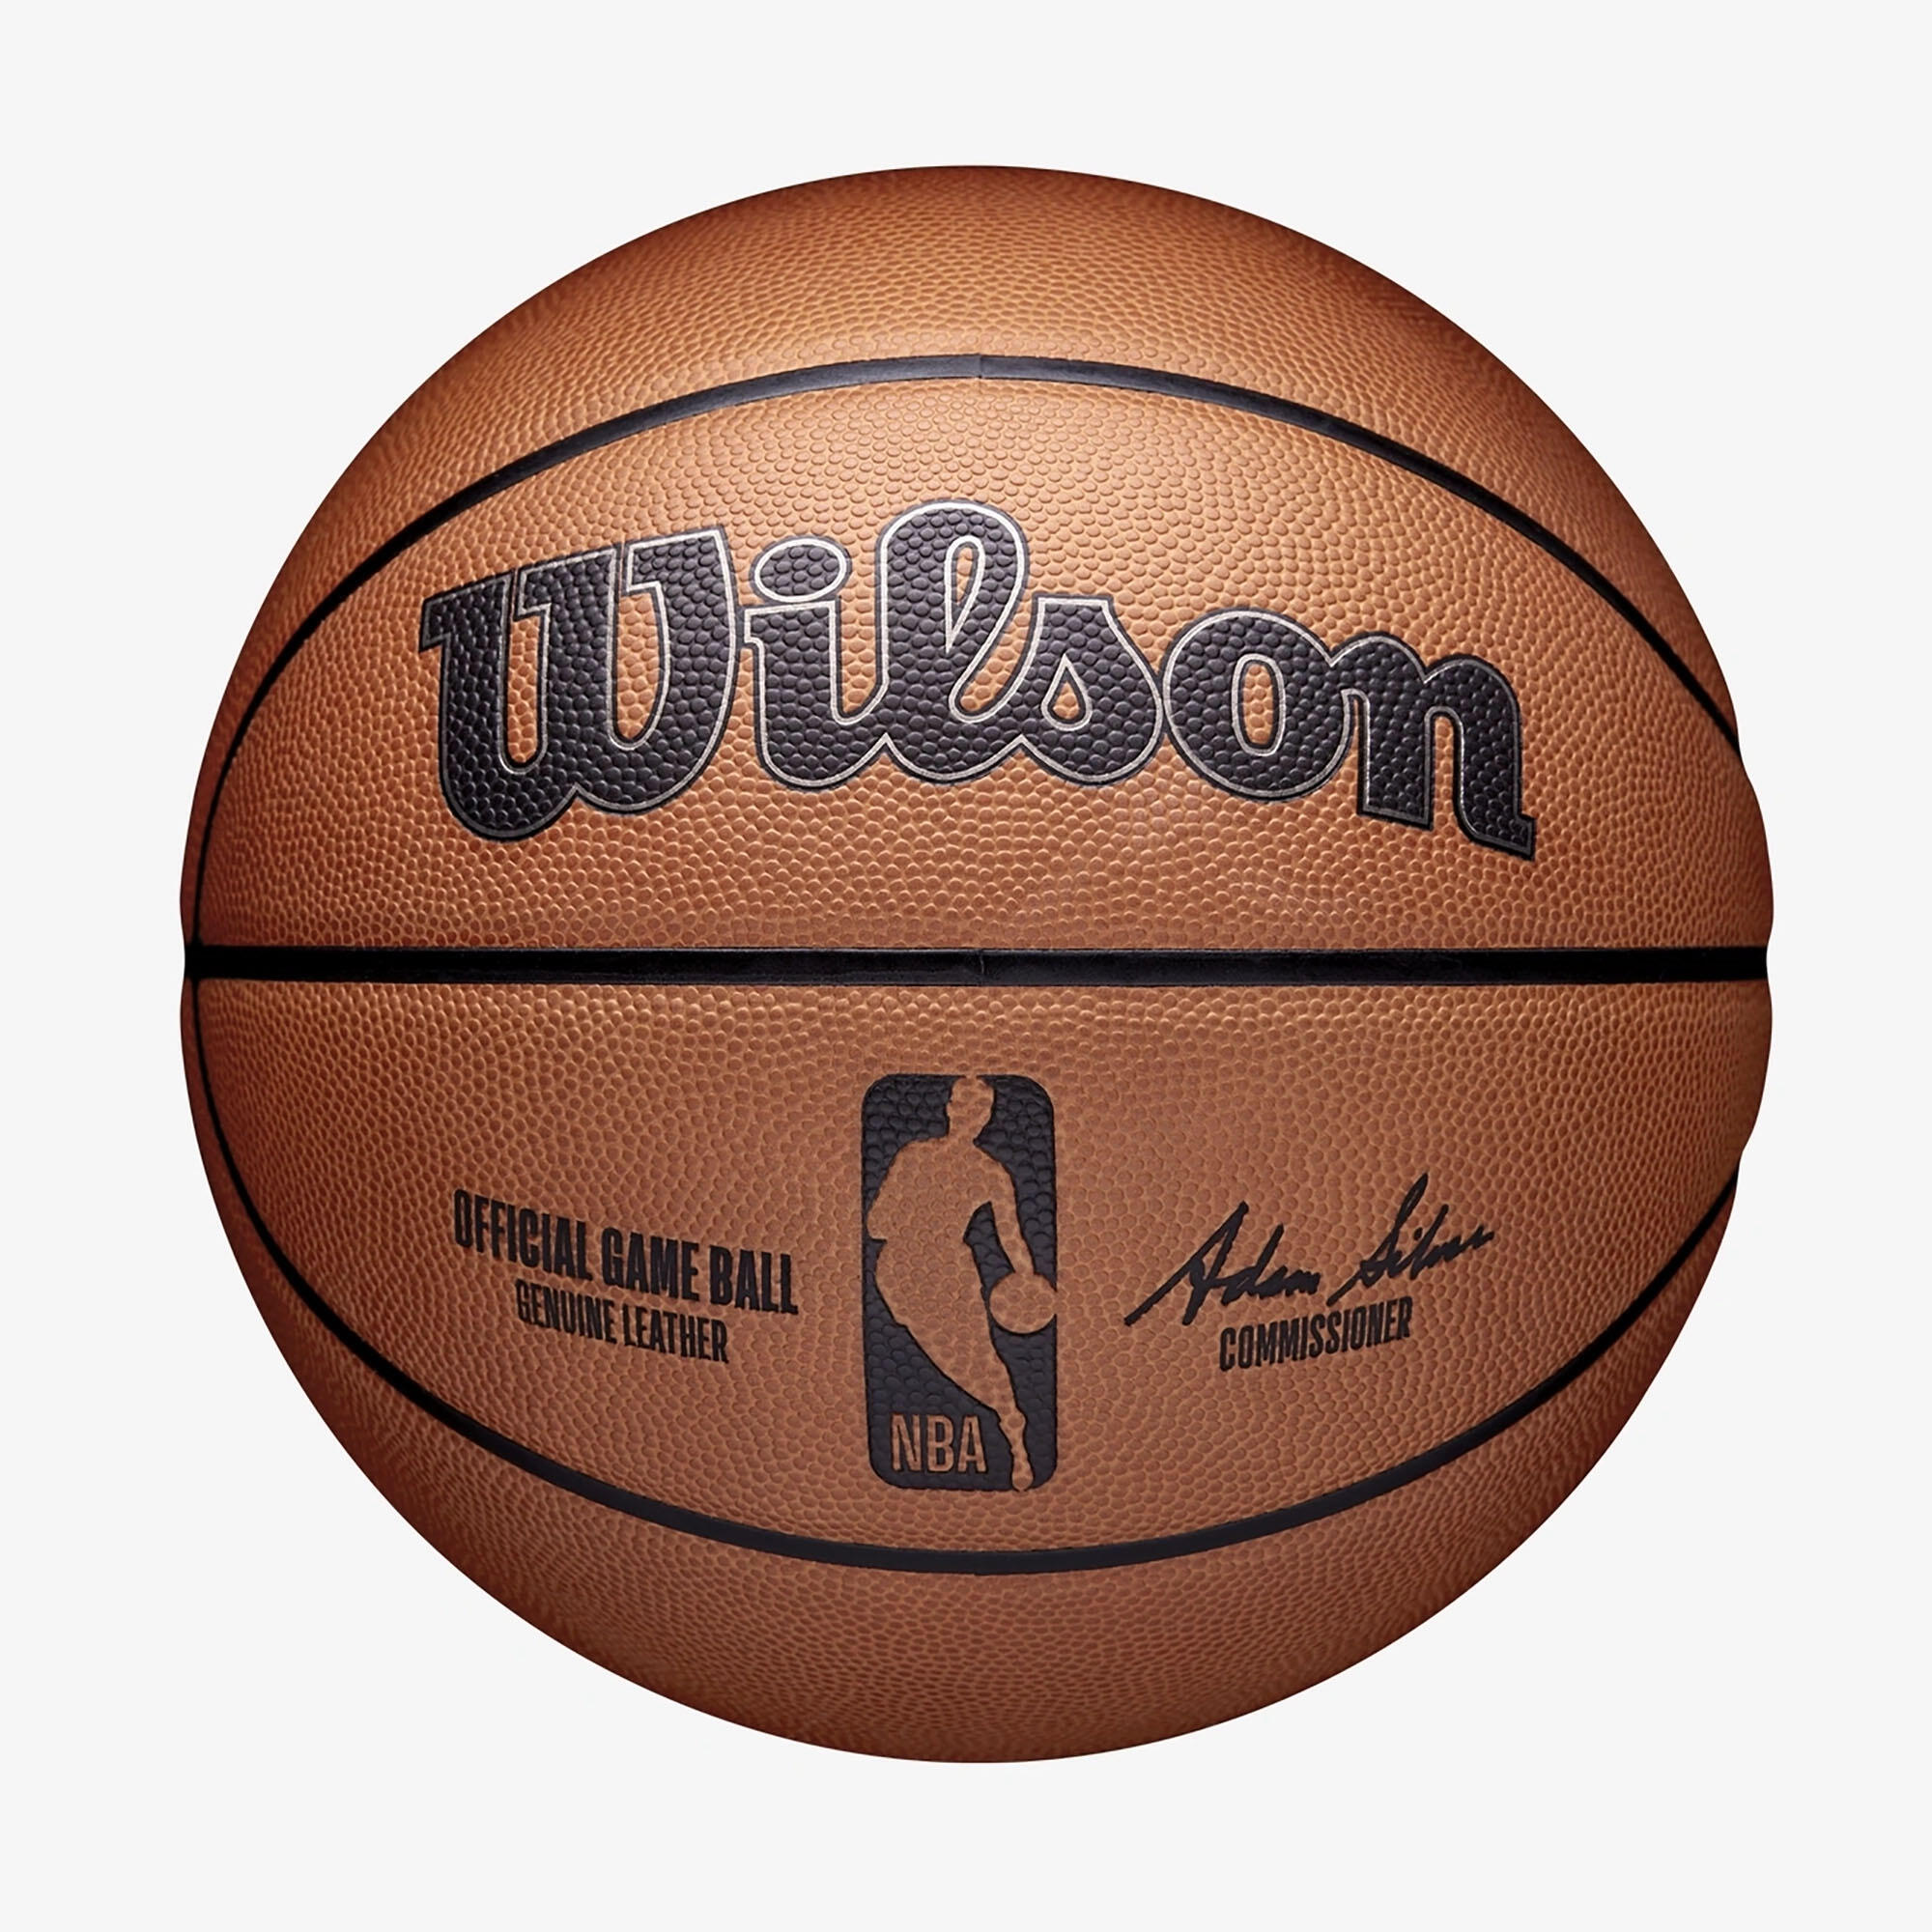 Wilson Basketball Size 7 Nba Official Game Ball - Brown